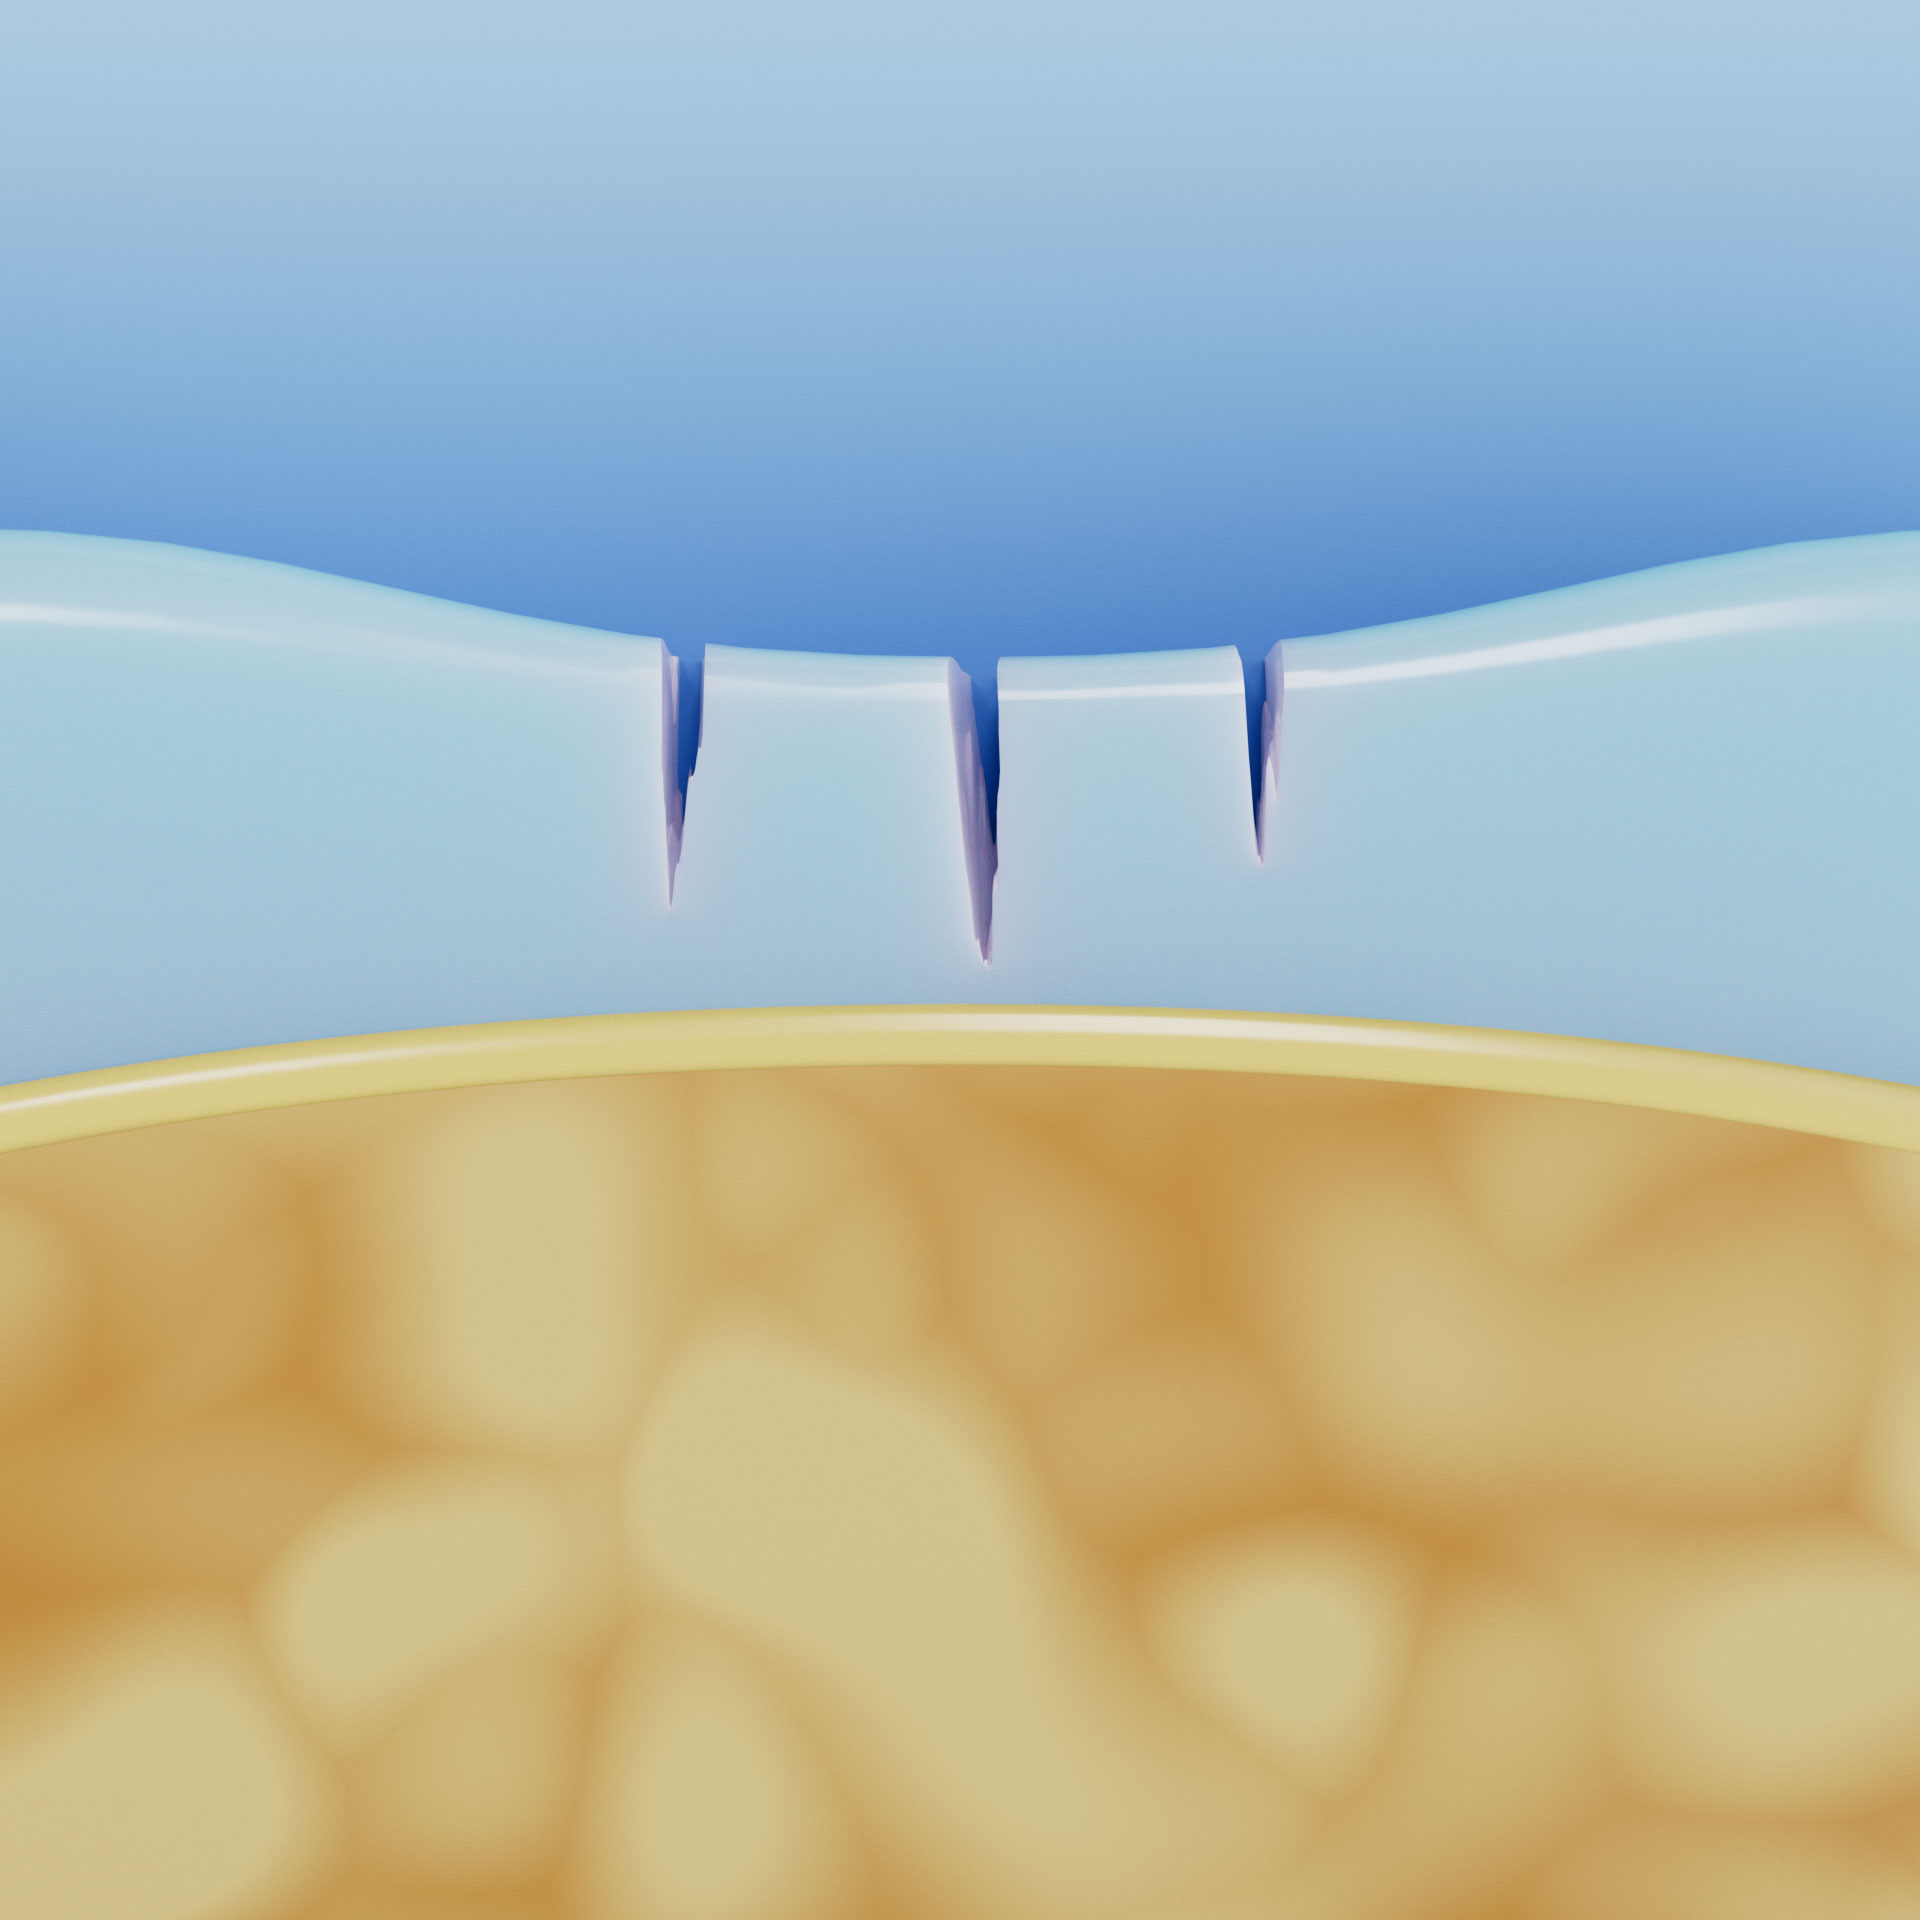 3D graphic: Image showing grade 2 cartilage damage